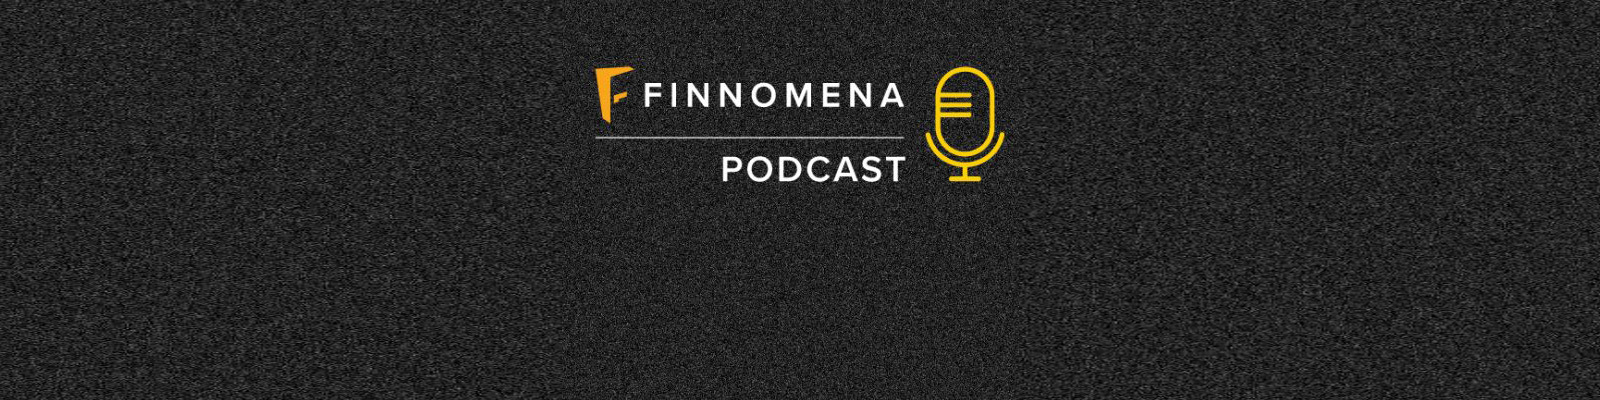 FINNOMENA Podcast